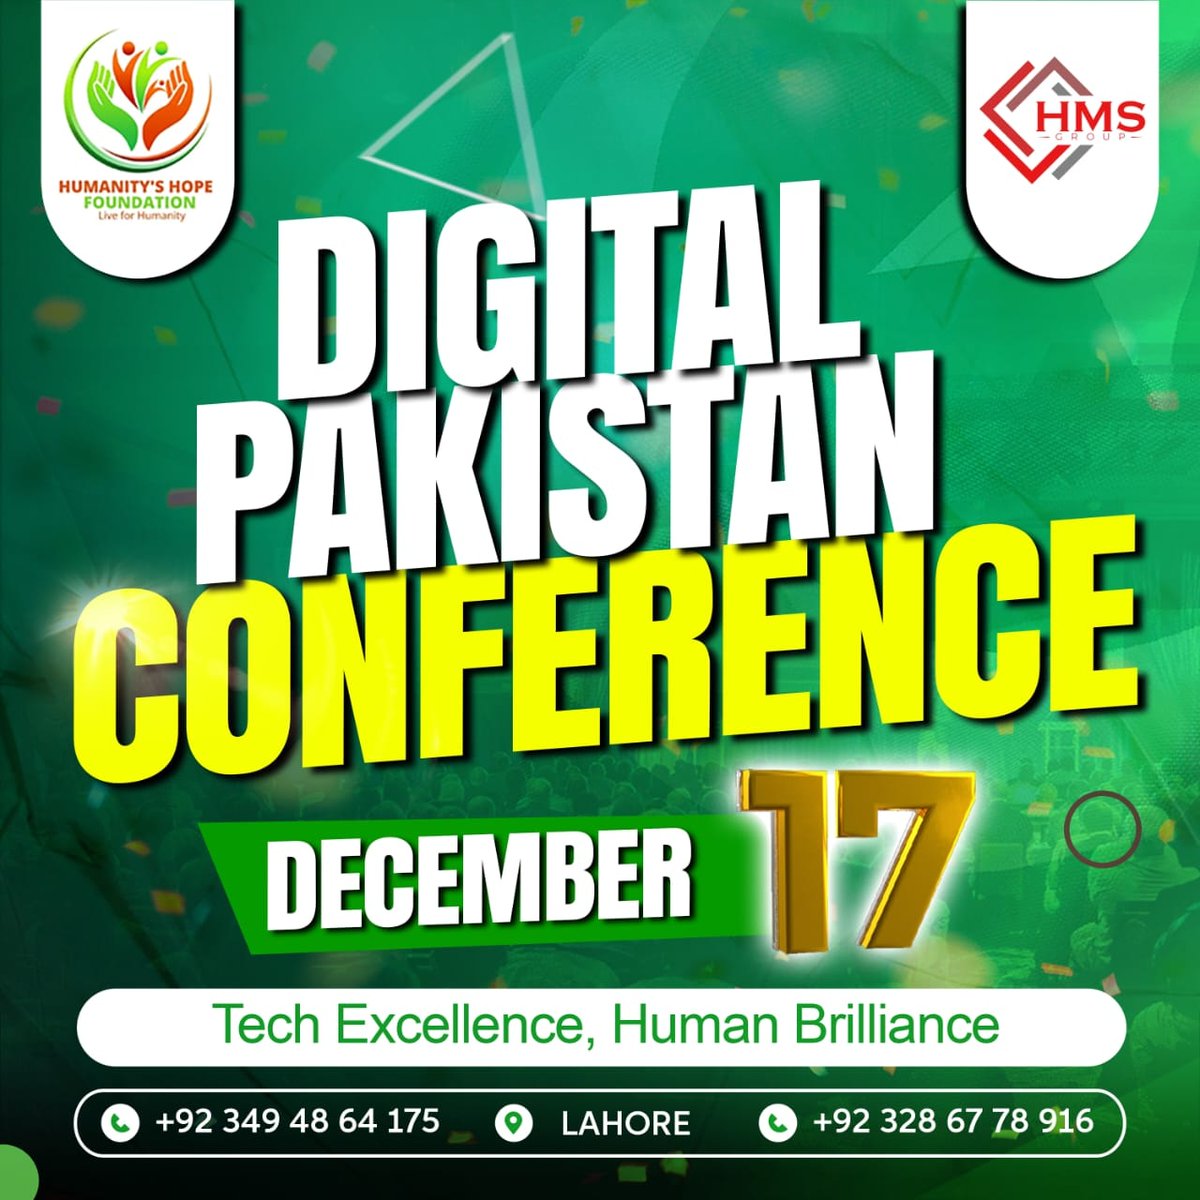 ᴡɪᴛʜᴏᴜᴛ ʟᴇᴀᴘꜱ ᴏꜰ ɪᴍᴀɢɪɴᴀᴛɪᴏɴ ᴏʀ ᴅʀᴇᴀᴍɪɴɢ, ᴡᴇ ʟᴏꜱᴇ ᴛʜᴇ ᴇxᴄɪᴛᴇᴍᴇɴᴛ ᴏꜰ ᴘᴏꜱꜱɪʙɪʟɪᴛɪᴇꜱ. ᴅʀᴇᴀᴍɪɴɢ, ᴀꜰᴛᴇʀ ᴀʟʟ ɪꜱ ᴀ ꜰᴏʀᴍ ᴏꜰ ᴘʟᴀɴɴɪɴɢ.*

Regards* 
#Humanity's Hope Foundation 
#Digital
#Pakistan 
#conference2023 #youthleaders